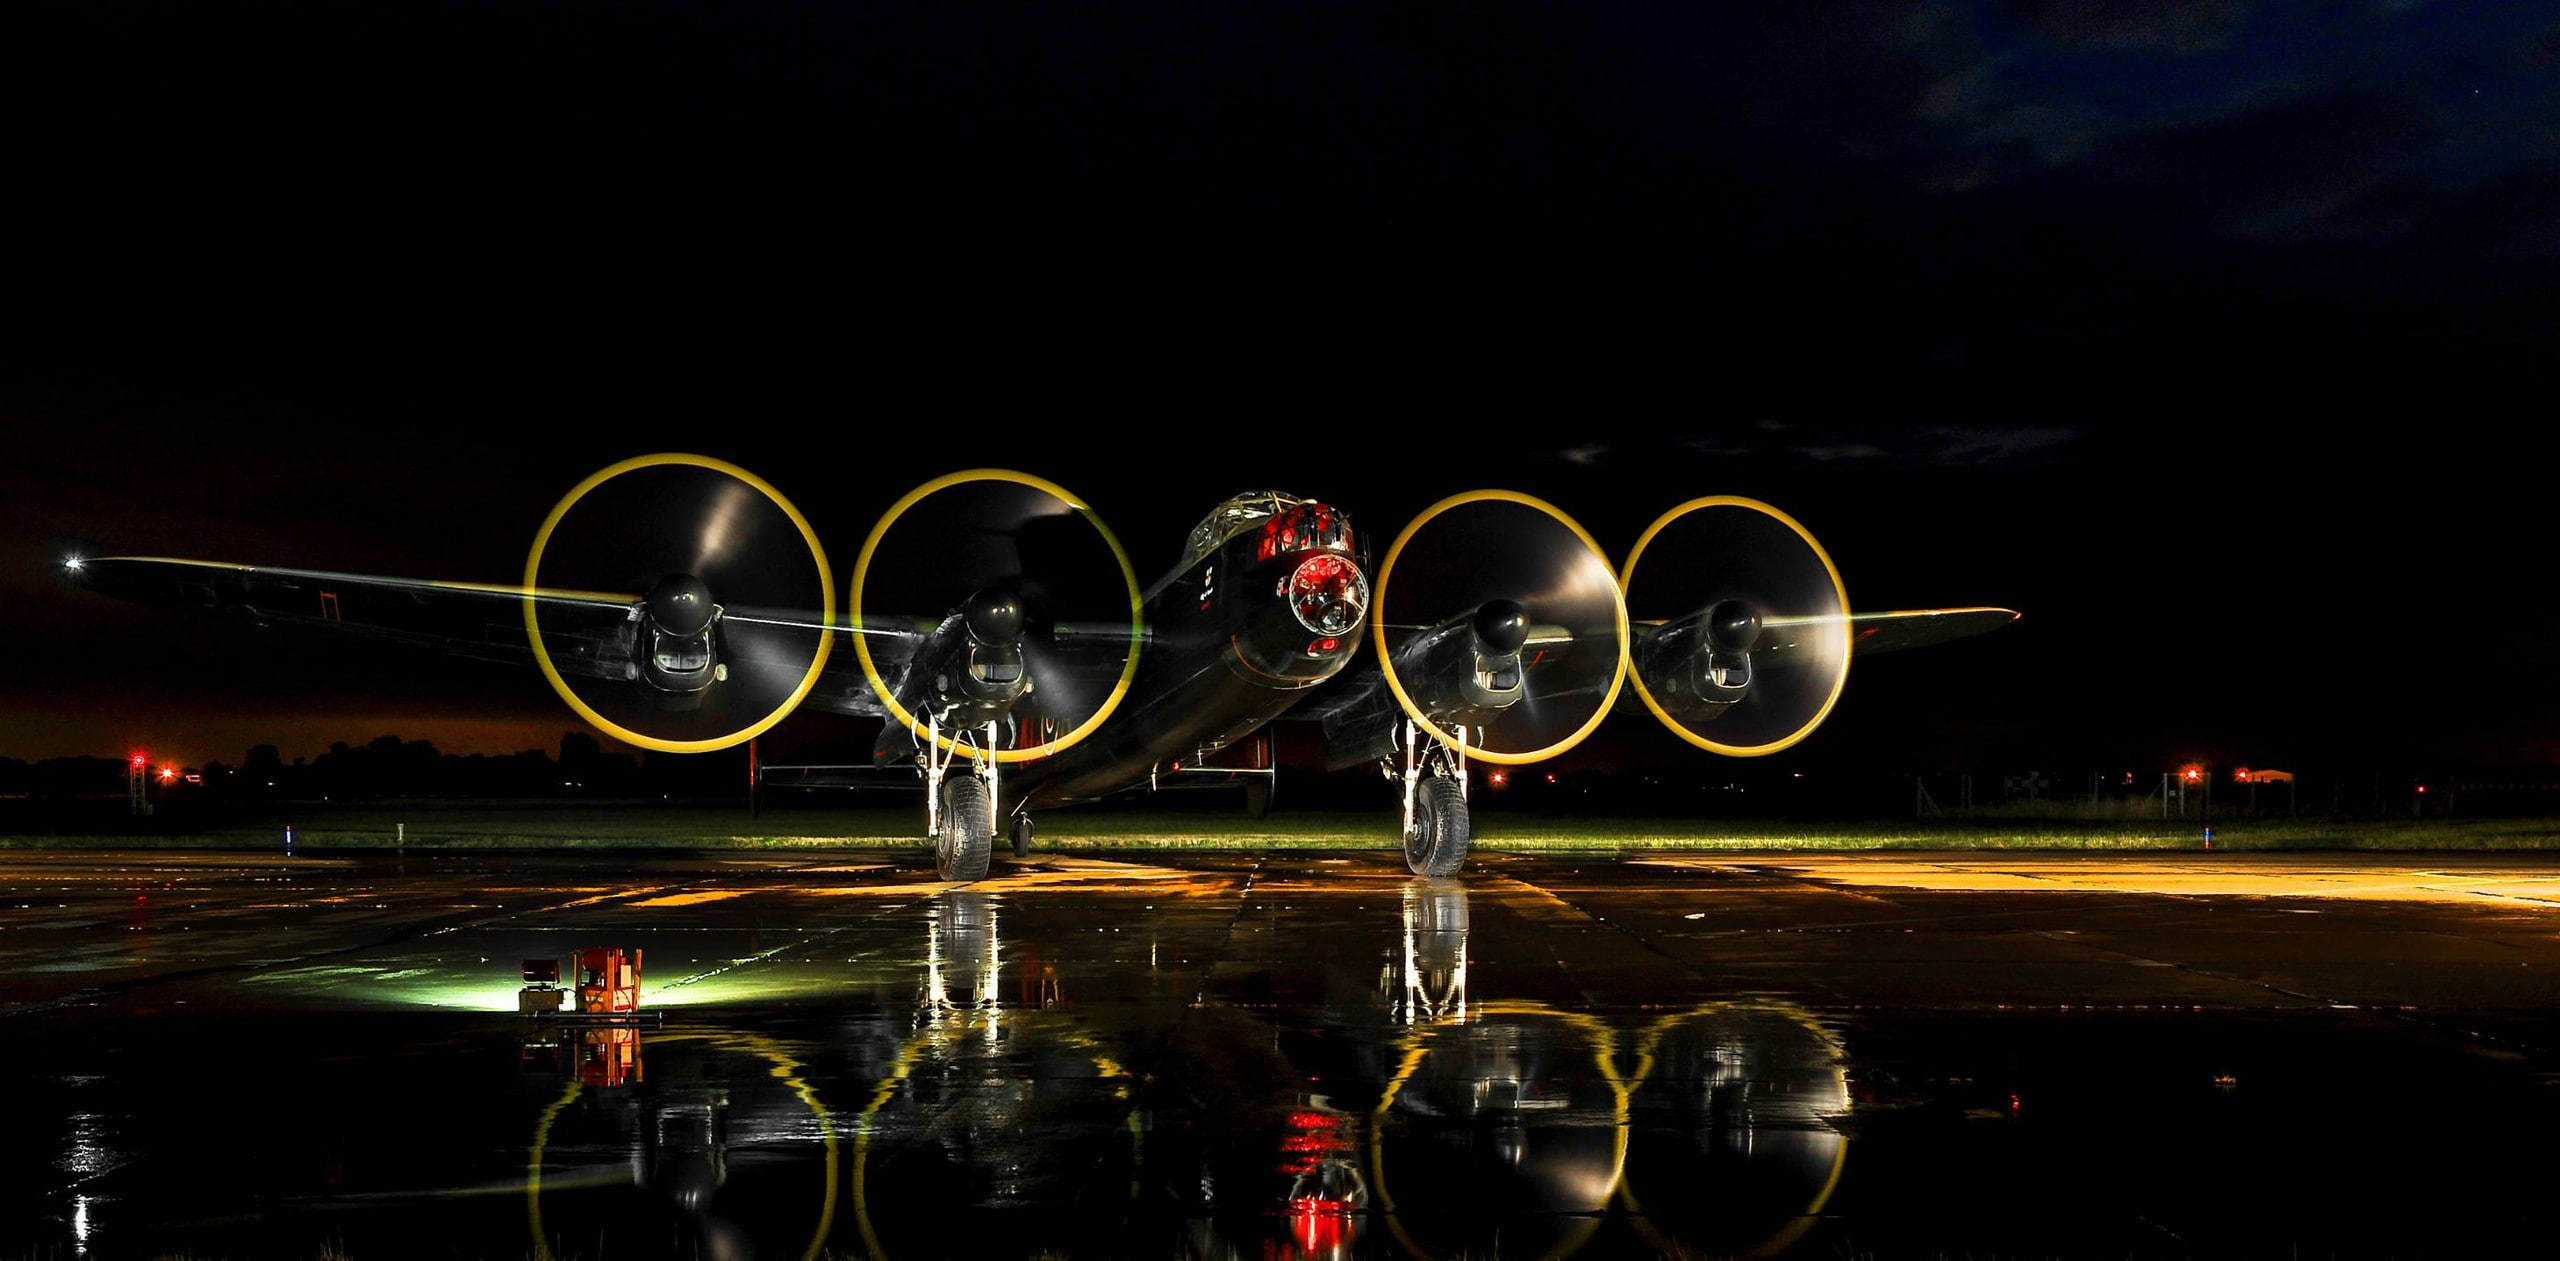 Avro Lancaster, planes, Bomber, reflection, runway, night, illuminated